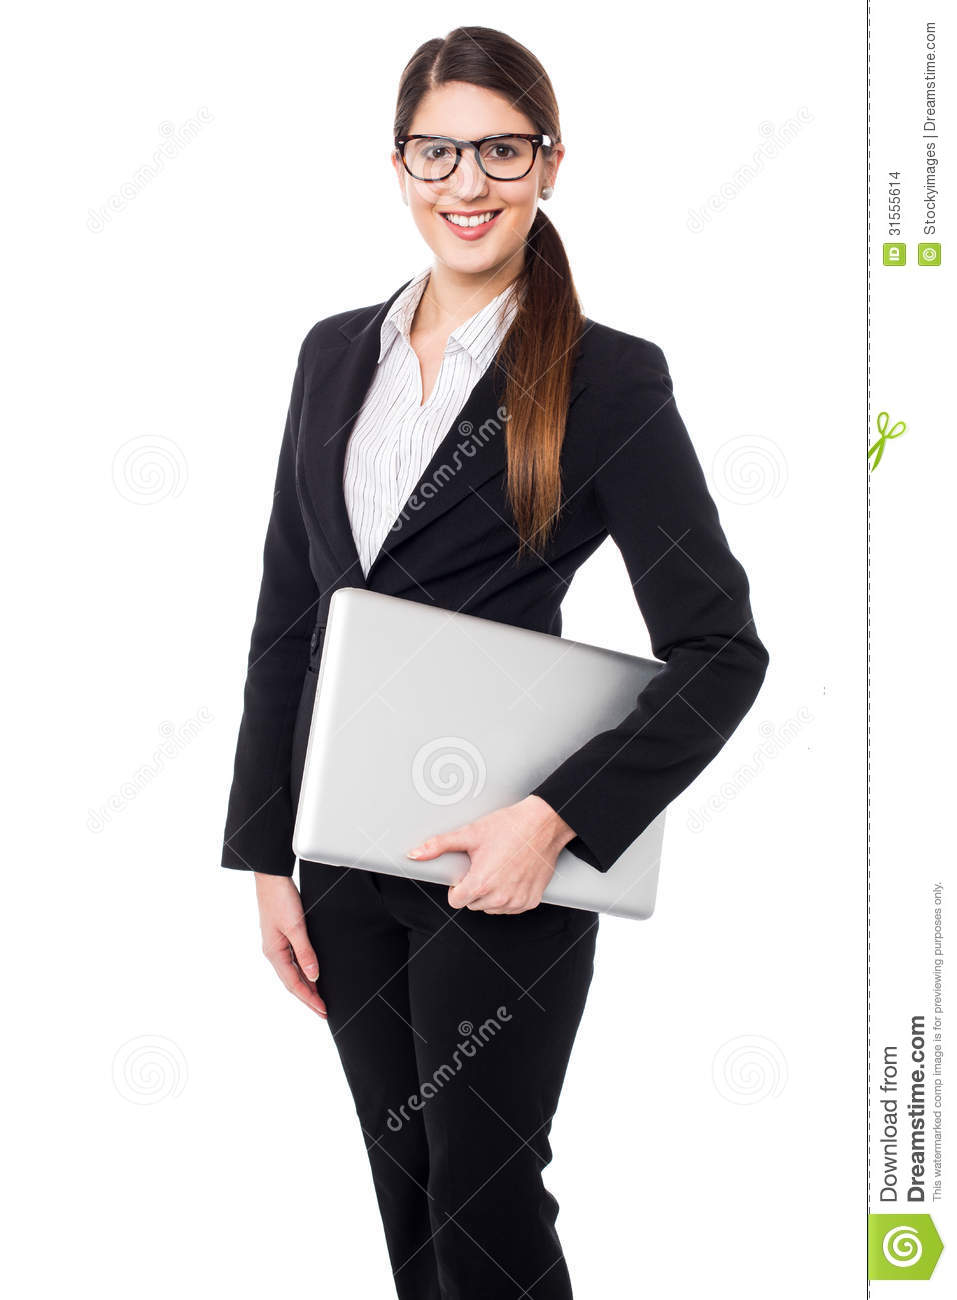 Confident Female Manager Holding Laptop Stock Images   Image  31555614